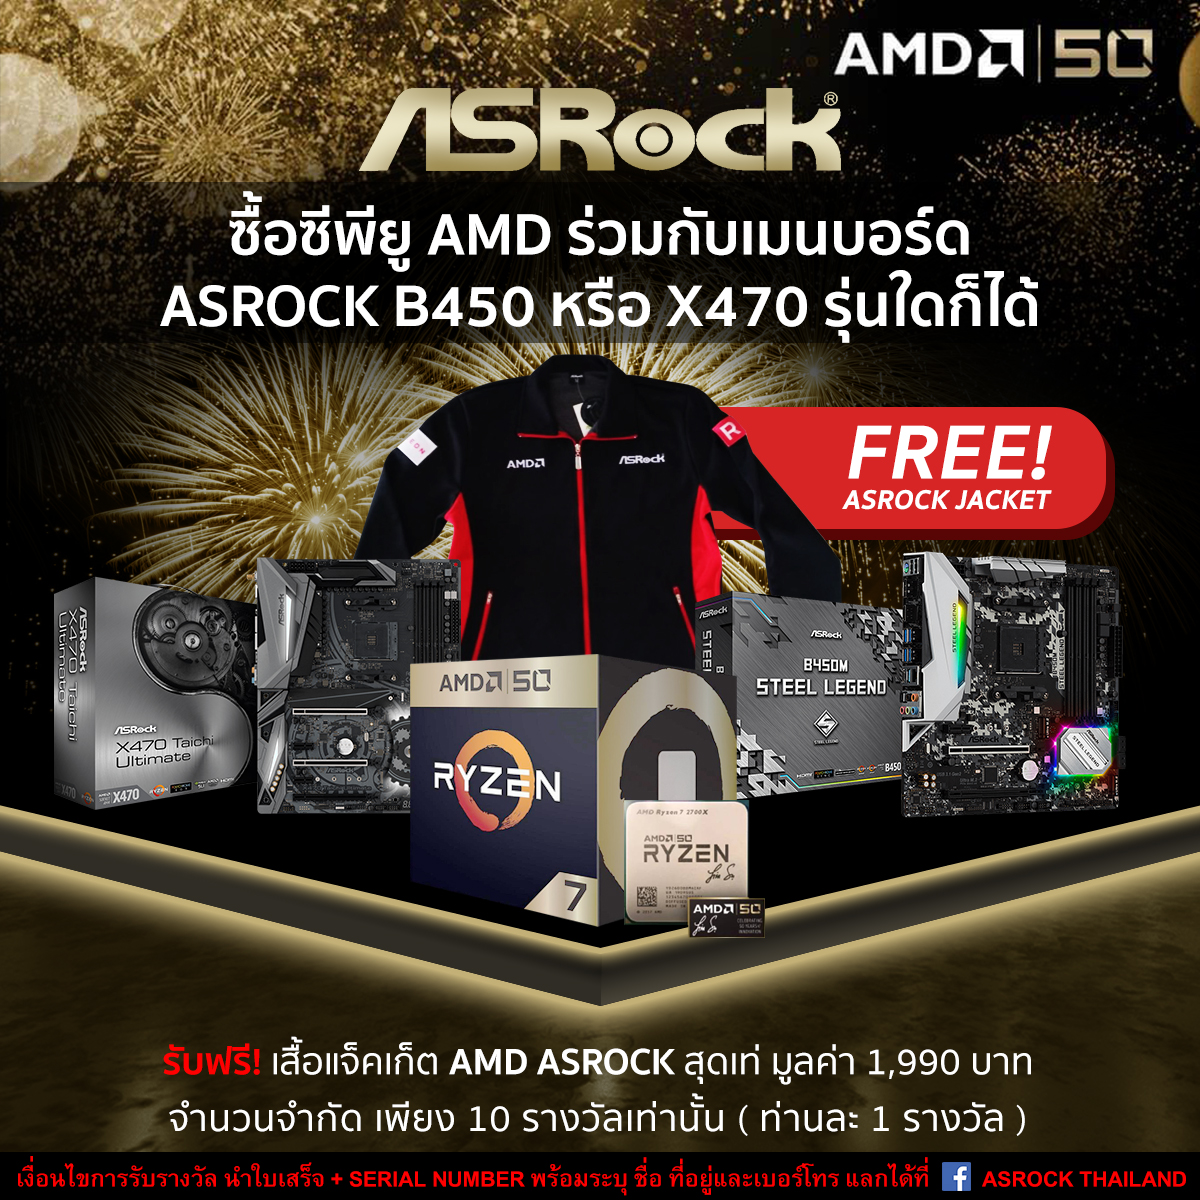 ASRock จัดโปรฯ ช้อปเมนบอร์ดคู่ซีพียู AMD Gold Edition รับฟรี! Jacket limited edition